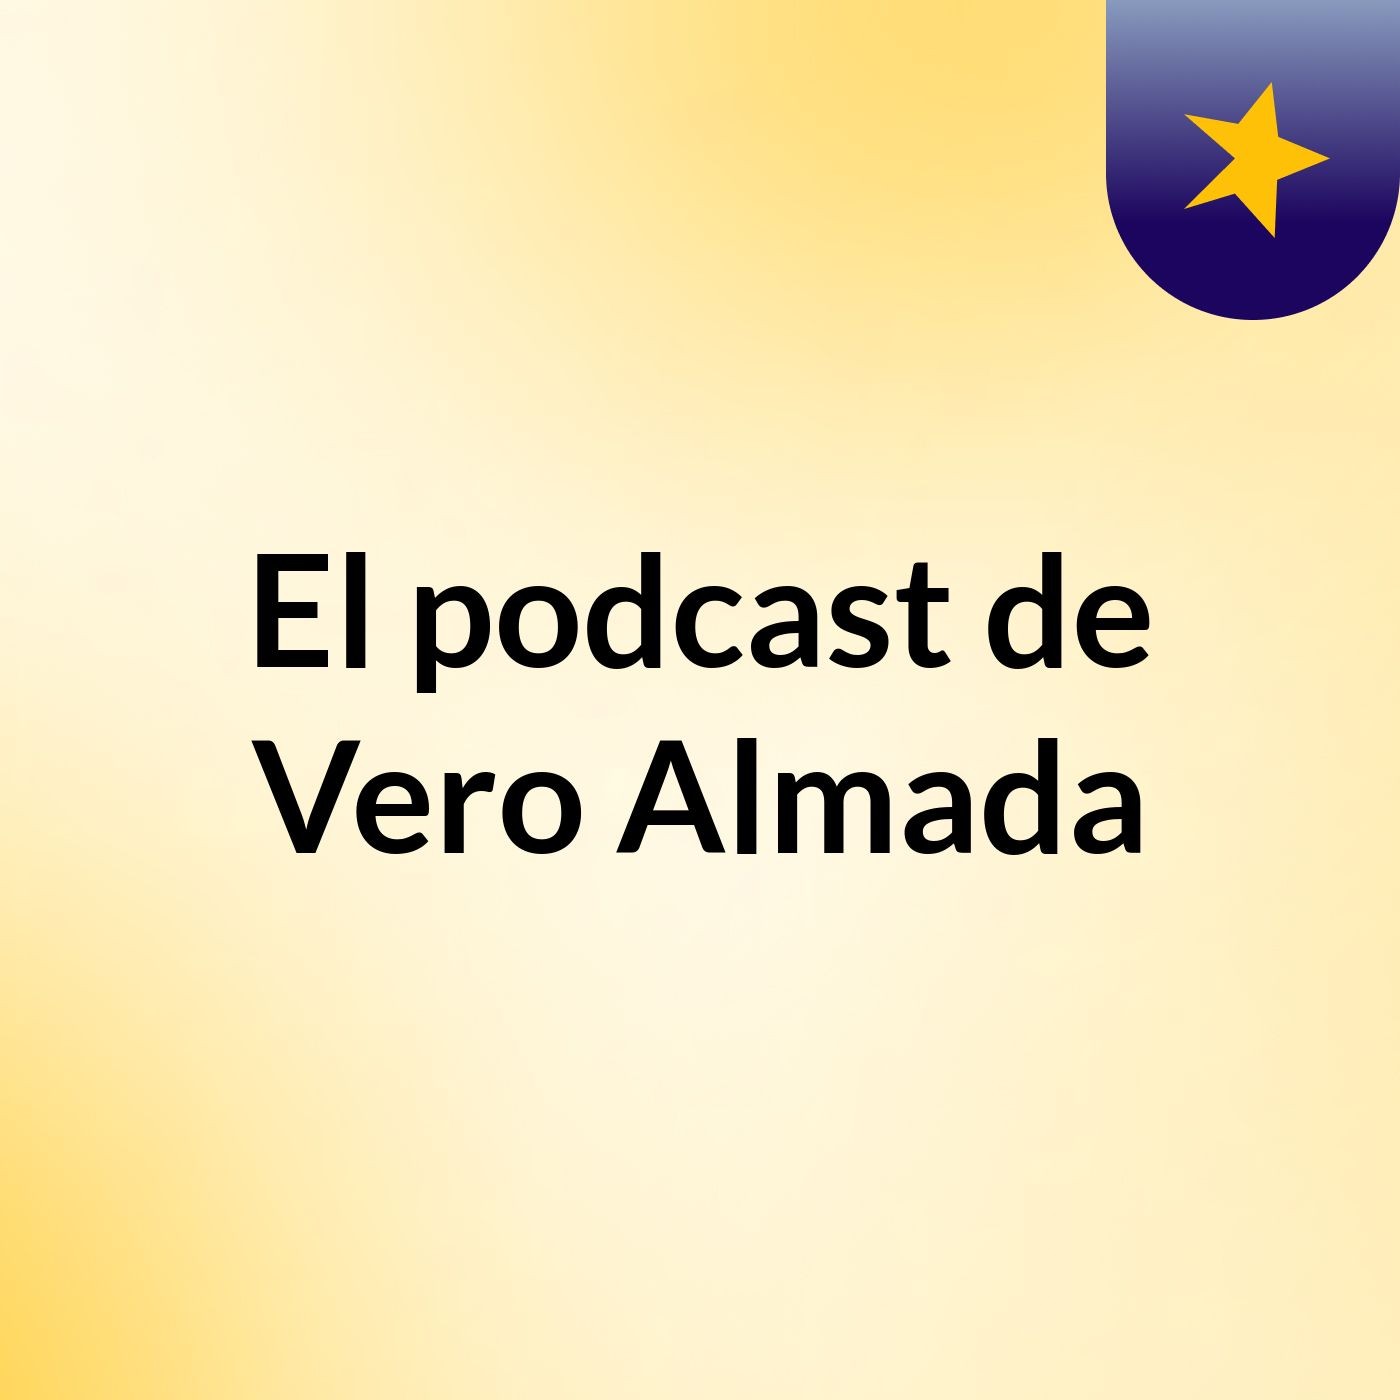 El podcast de Vero Almada